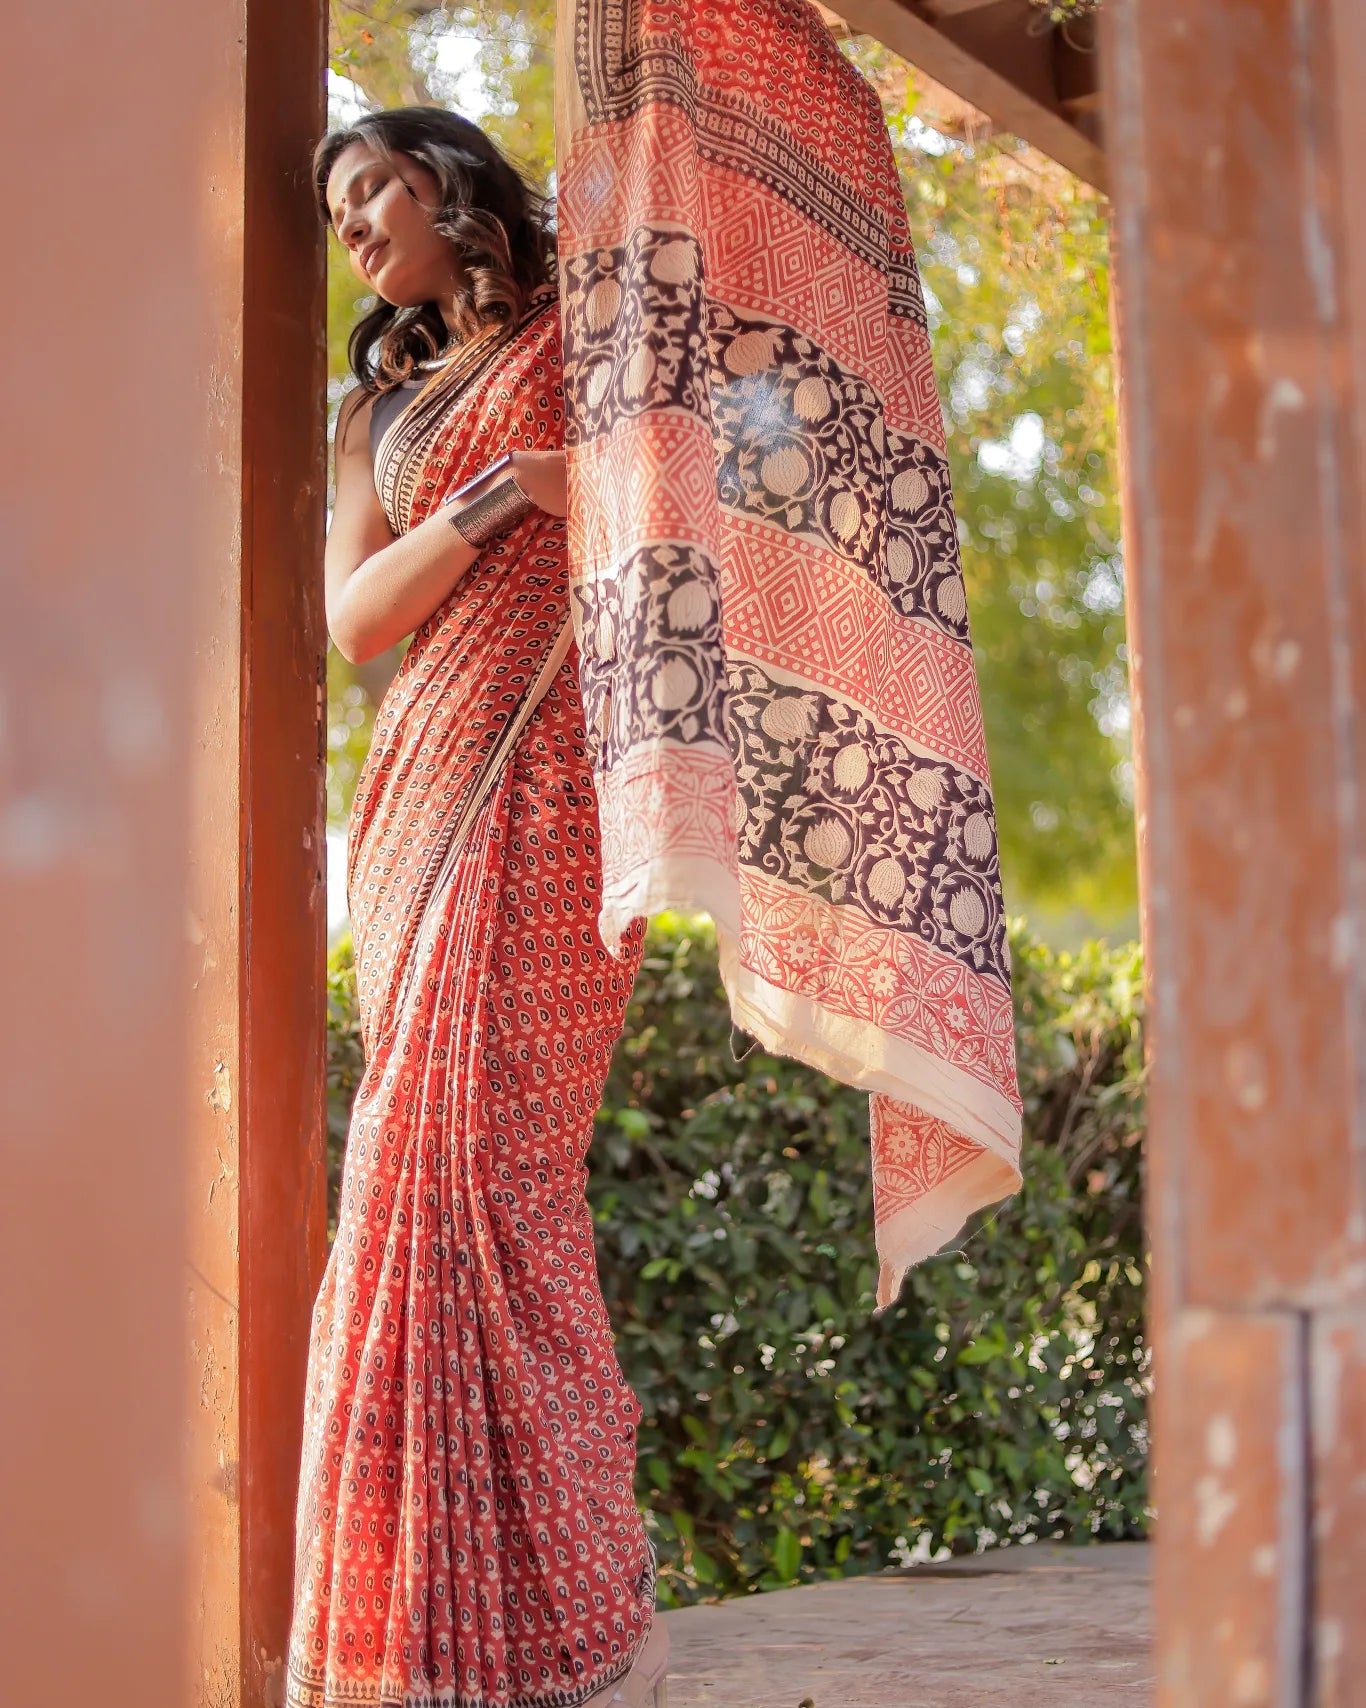 Bagru gadh red color pure cotton block print saree